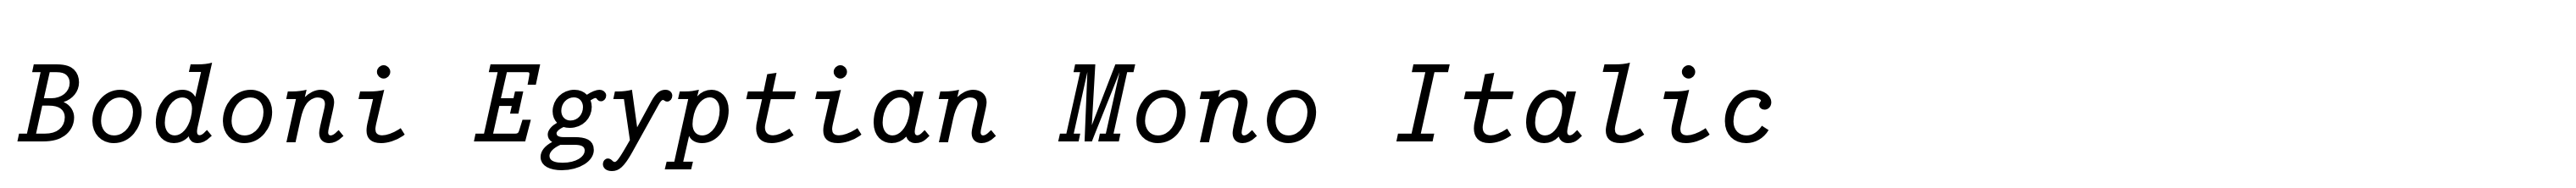 Bodoni Egyptian Mono Italic